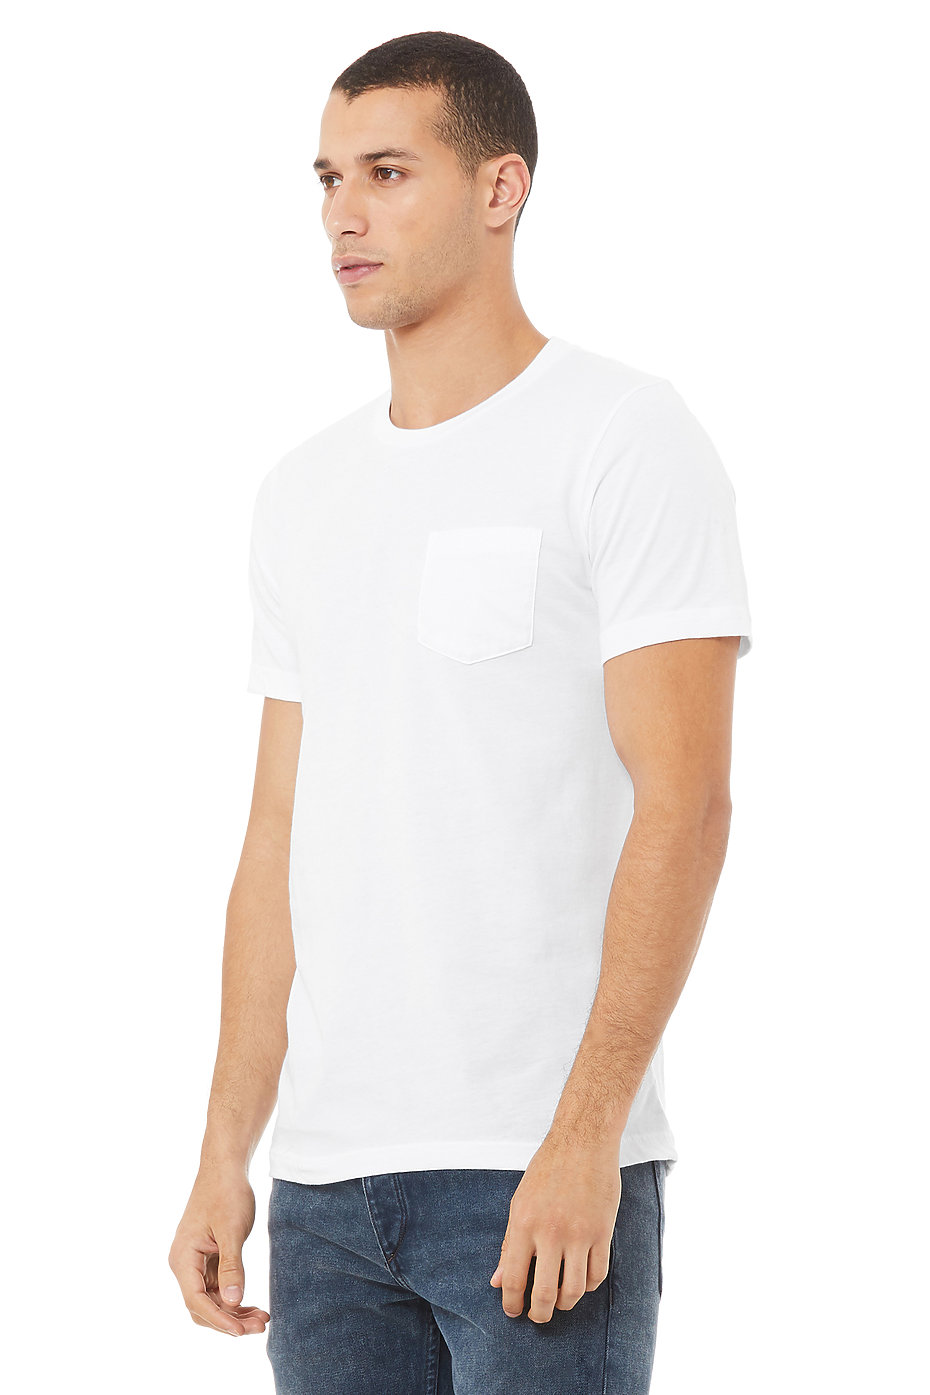 Canvas Mens Jersey Short-Sleeve Pocket T-Shirt Drk Gry Htr/Blk Style # 3021 - Original Label Canvas Bella By Bella S - 